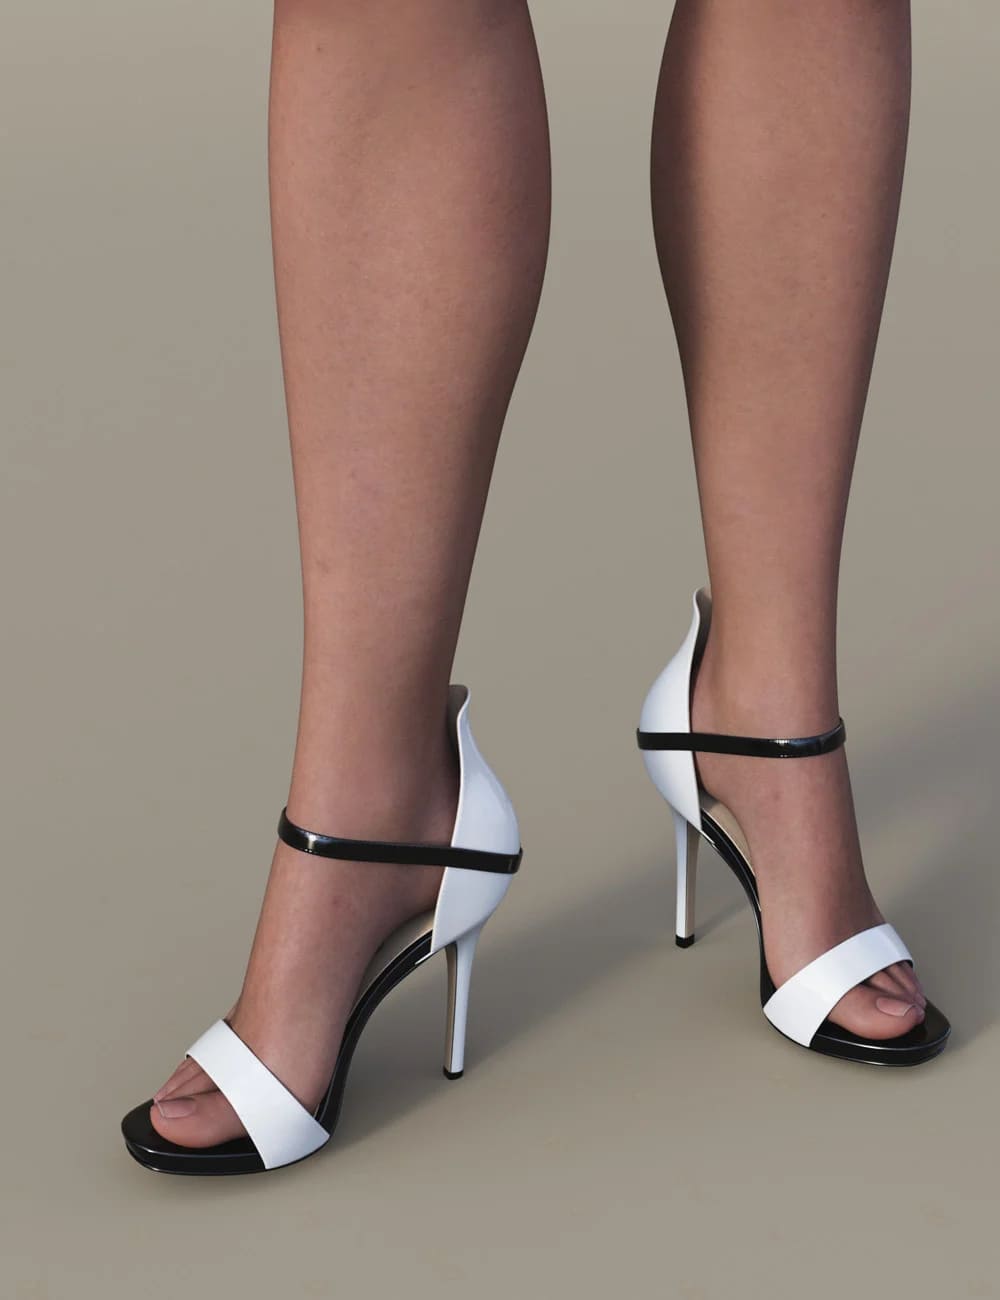 Sandals 5 for Genesis 9_DAZ3D下载站